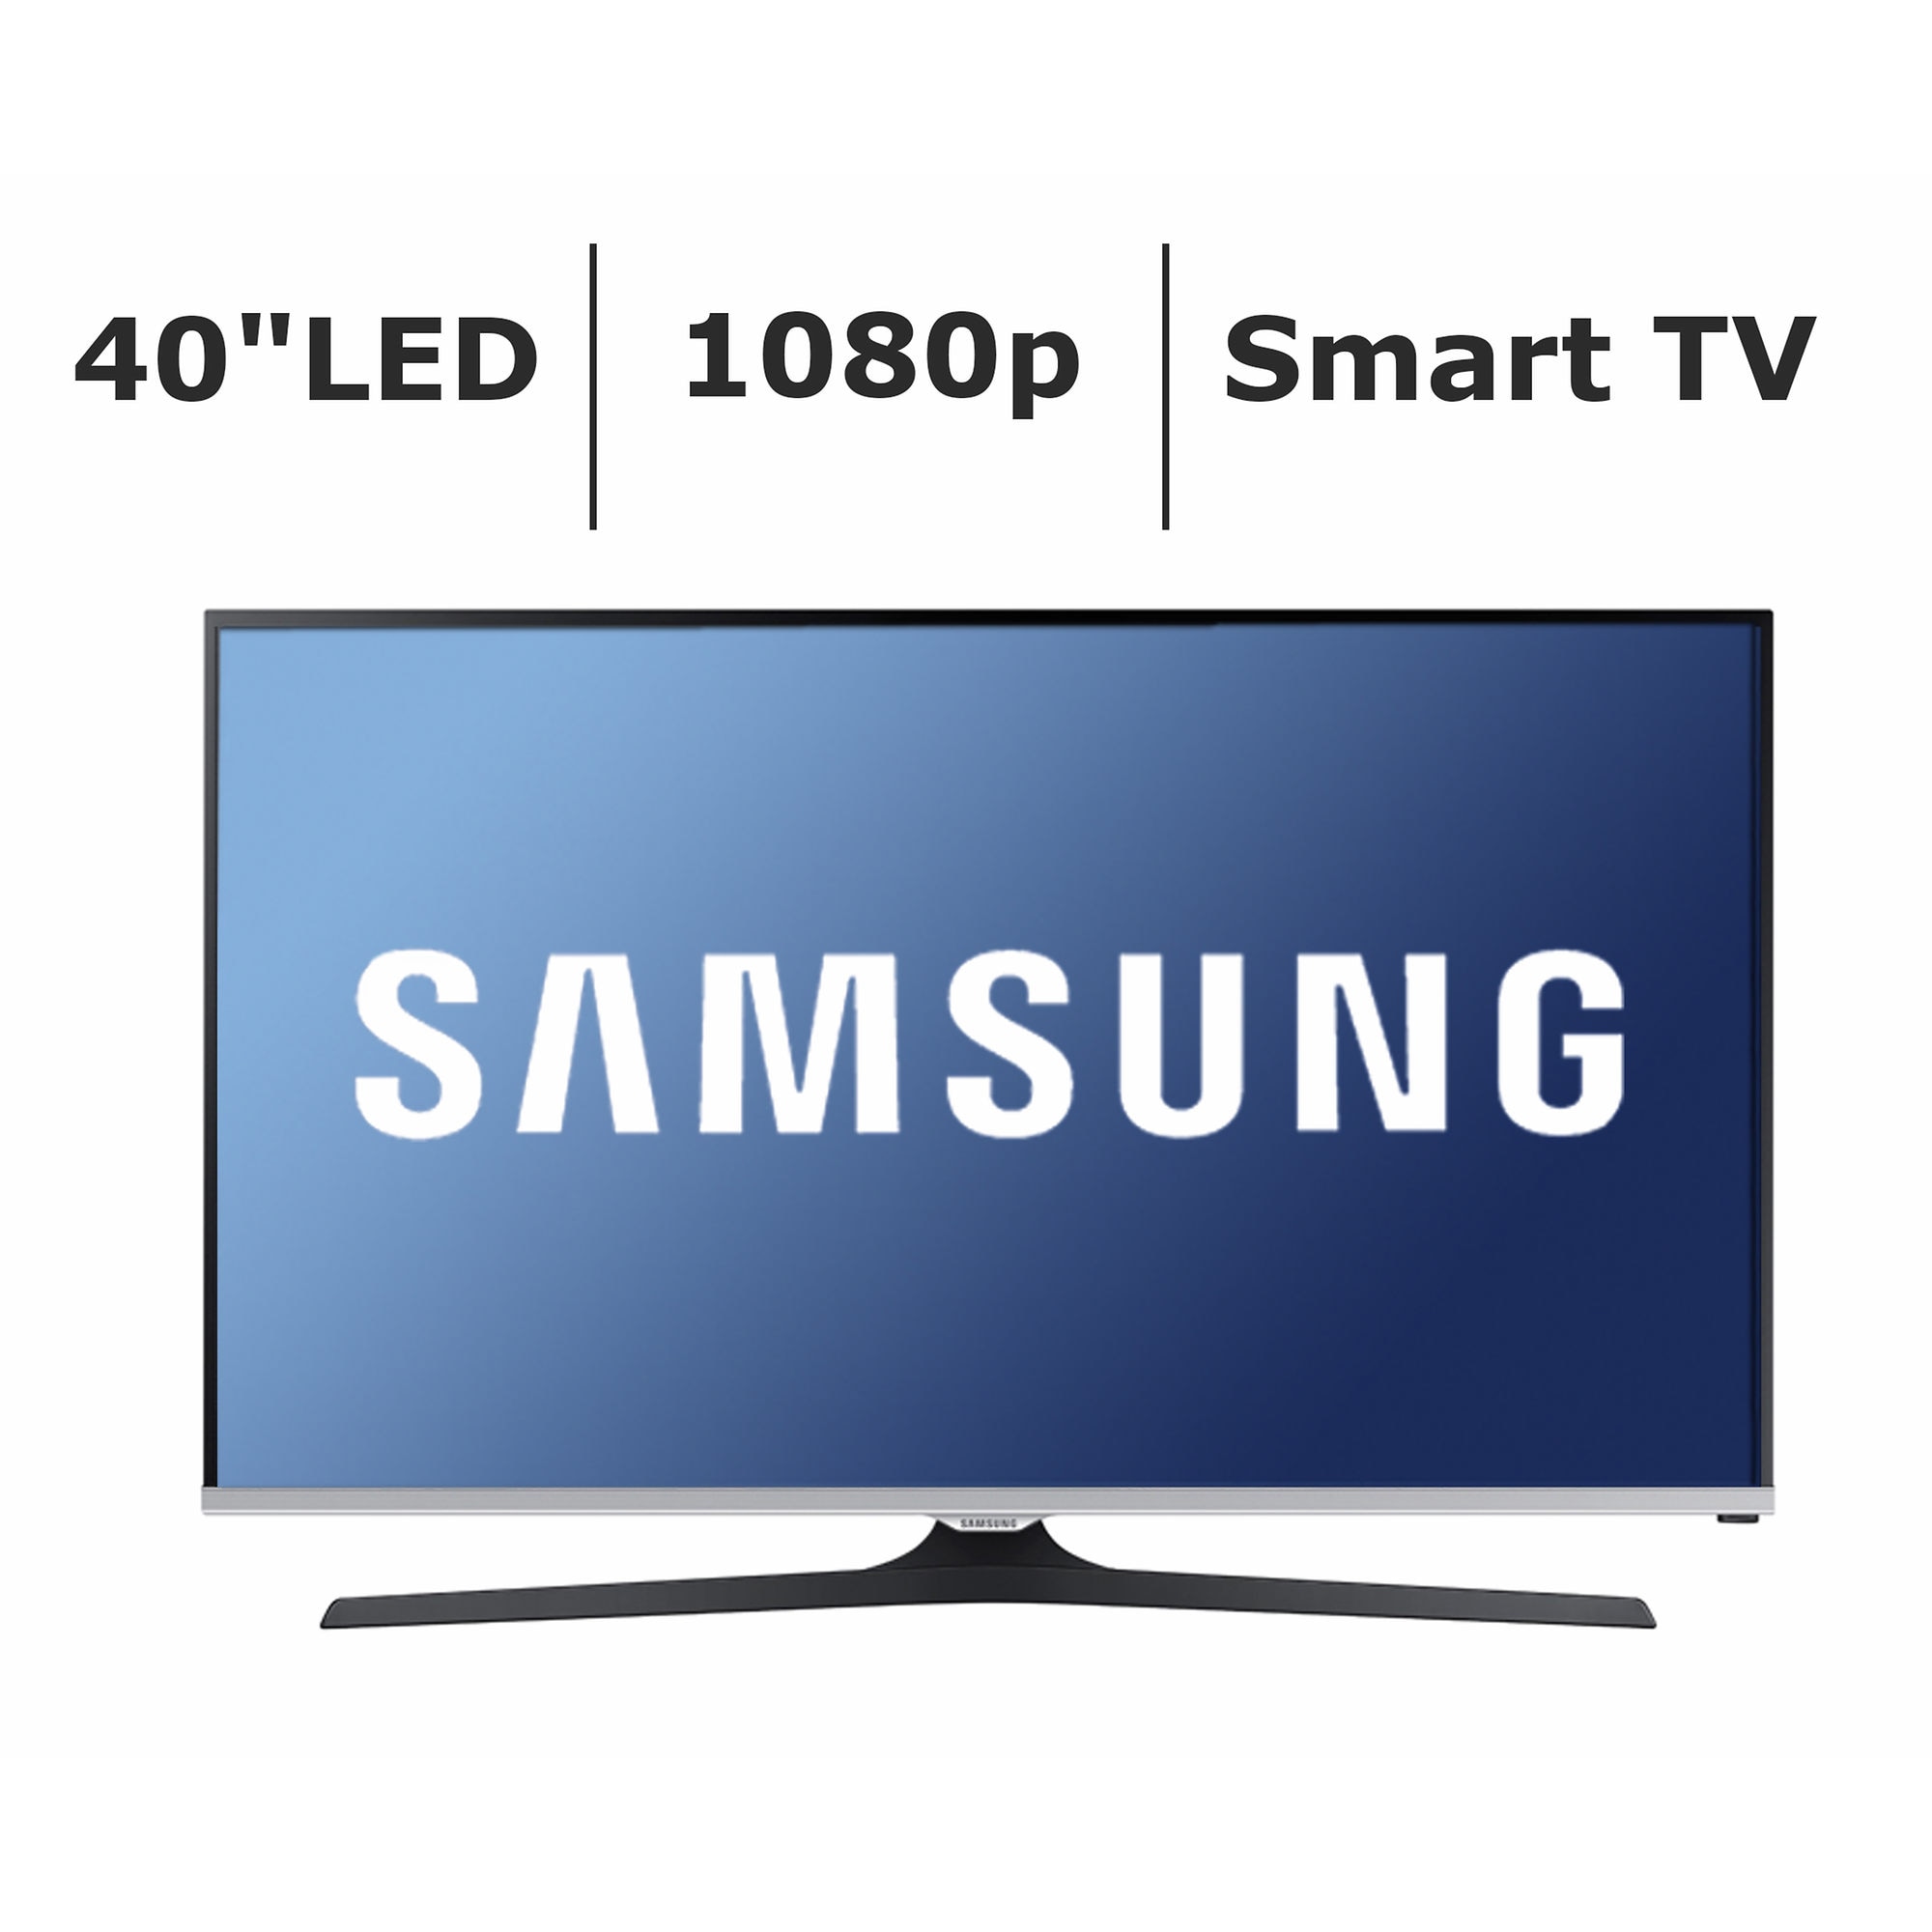 Samsung Un40j520d 40 Inch 1080p Smart Led Tv 19303135 Shopping The Best 2445